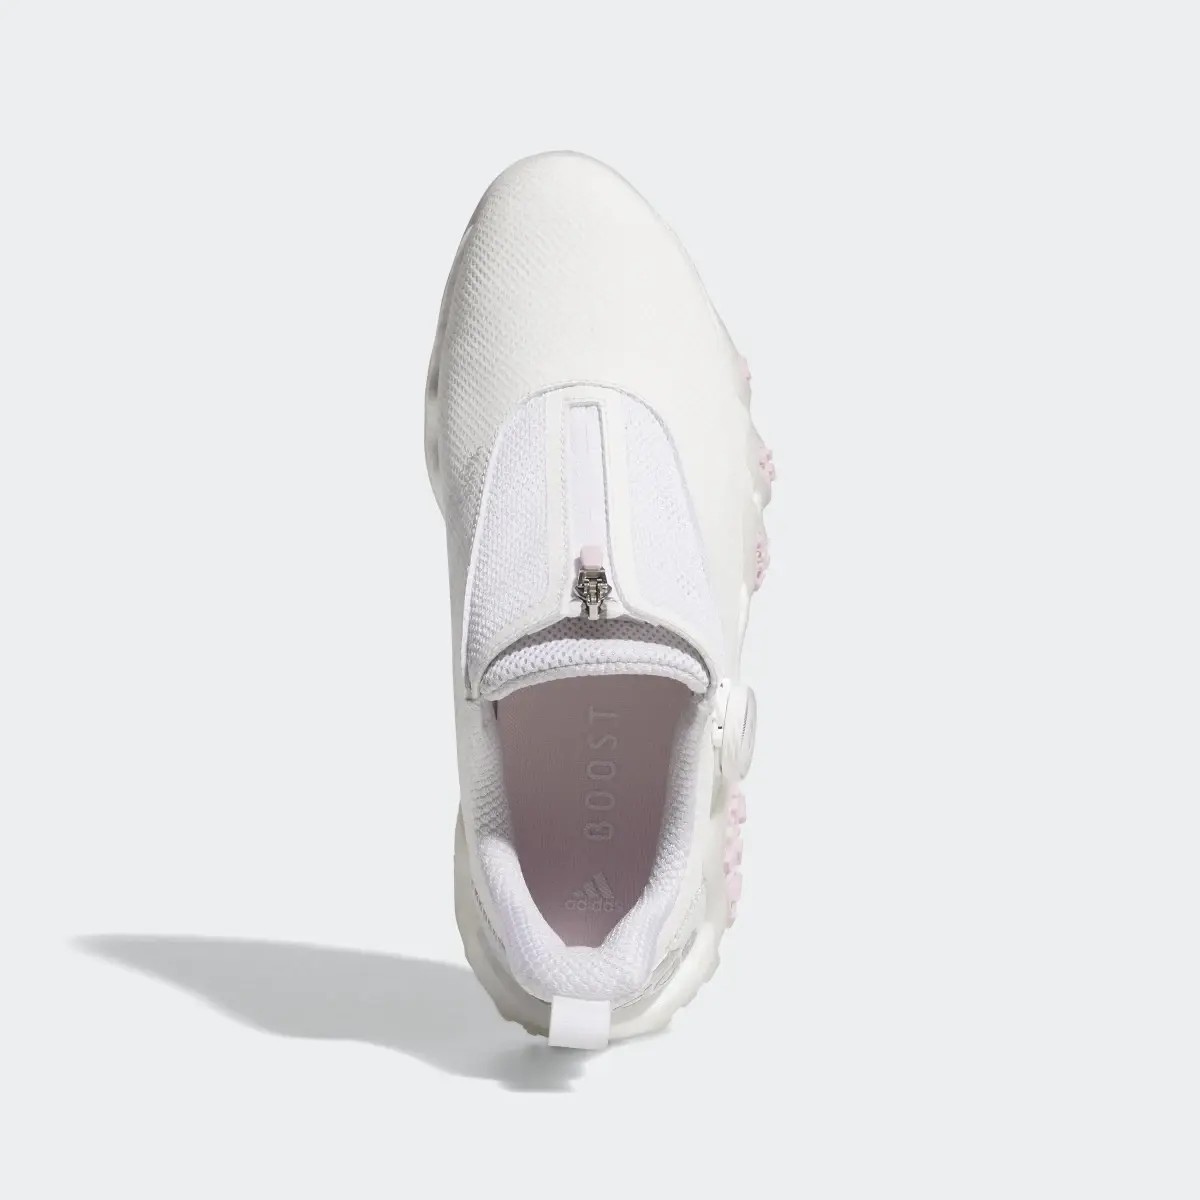 Adidas CODECHAOS 22 Spikeless Golf Shoes. 3